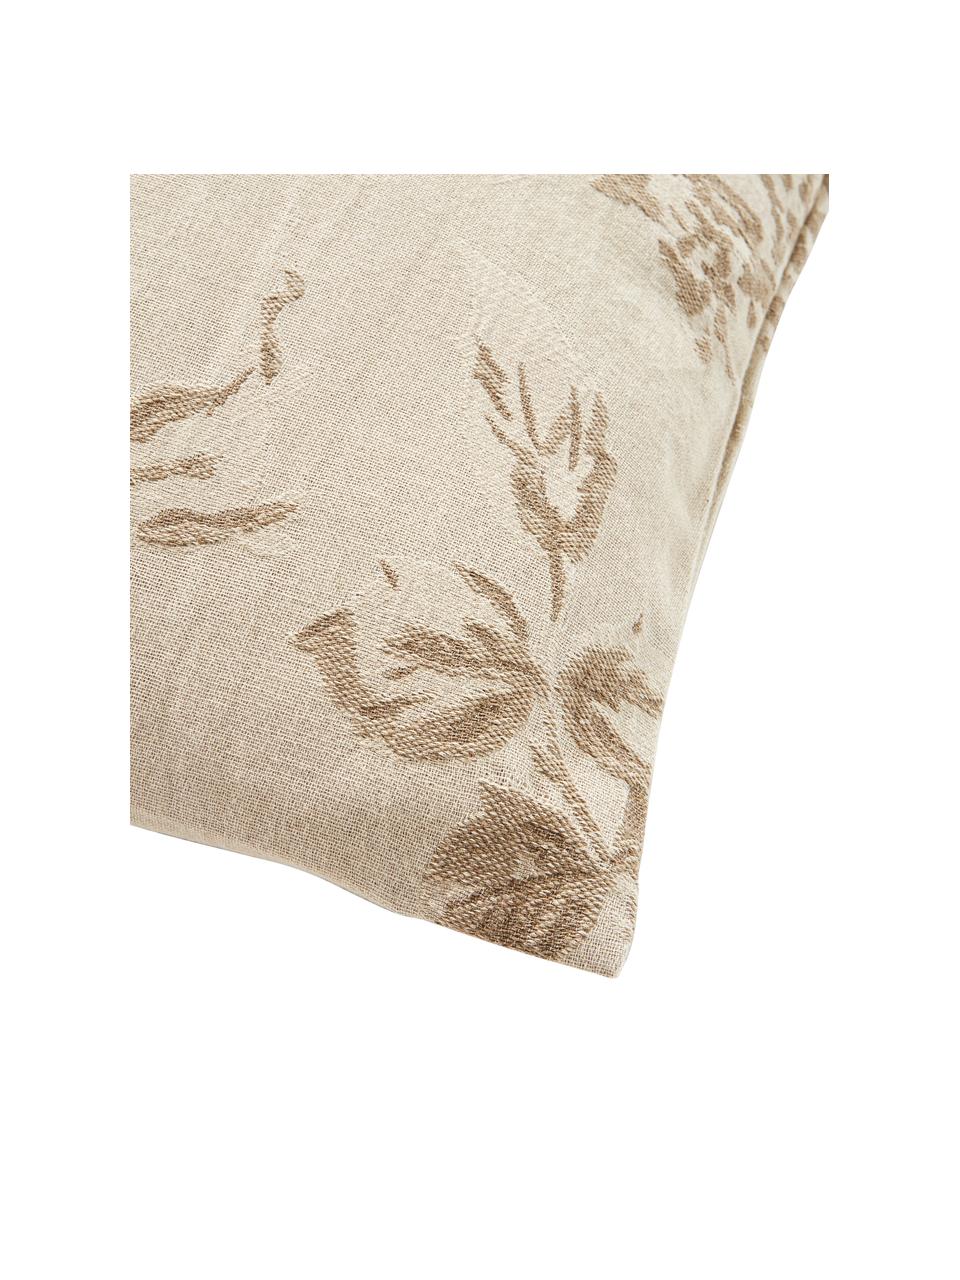 Baumwoll-Kissenhülle Breight mit gewebtem Jacquard-Muster, 100 % Baumwolle, Braun, Beige, B 50 x L 50 cm